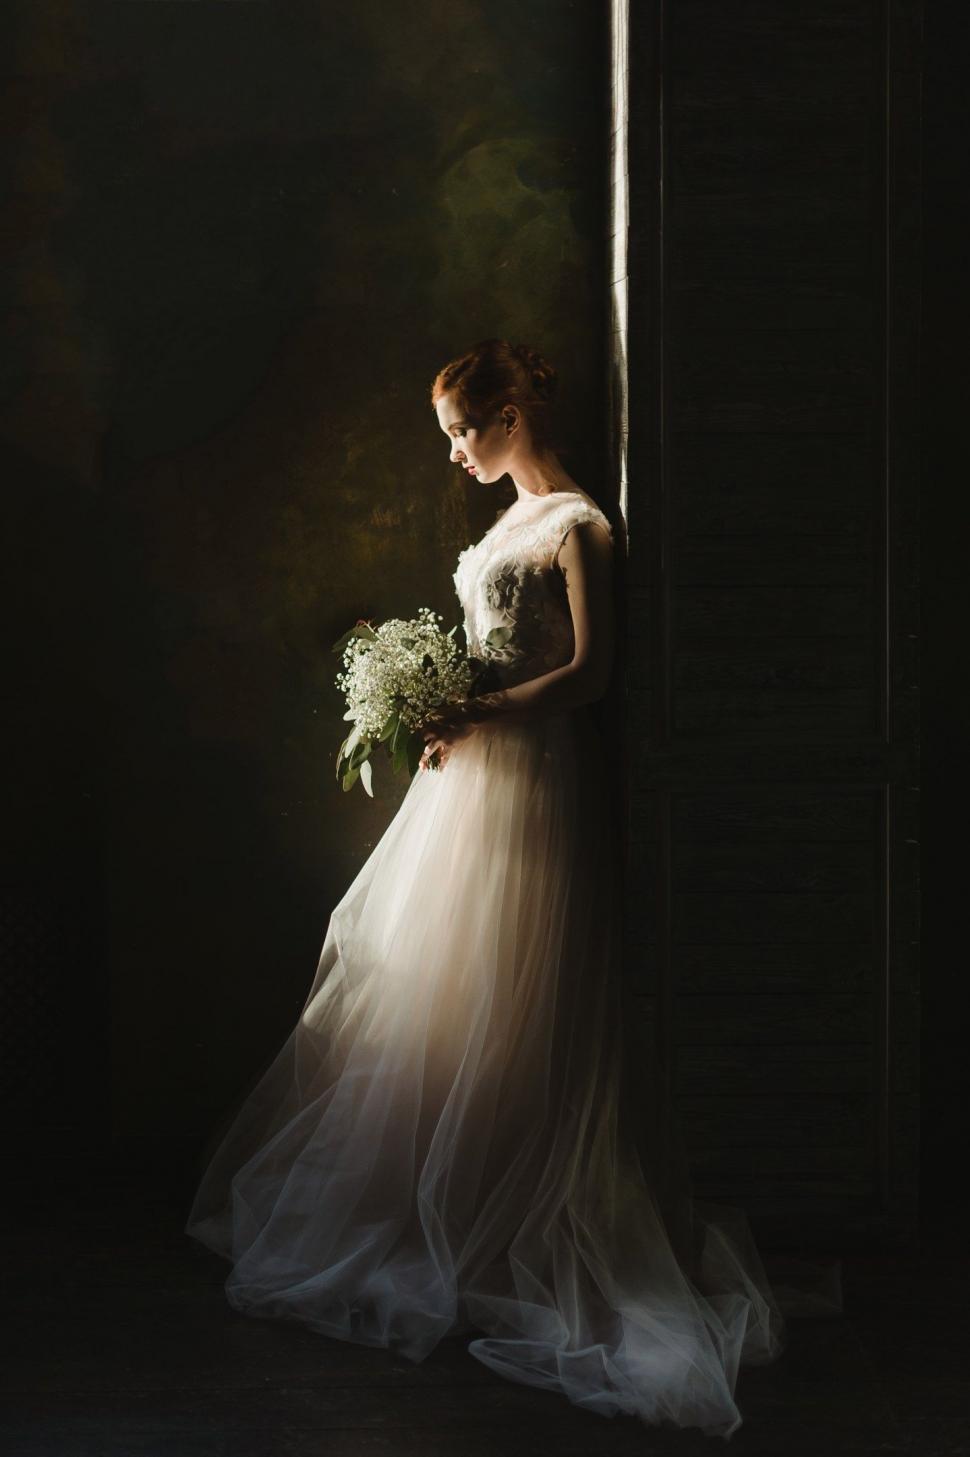 Free Image of Woman in Wedding Dress 